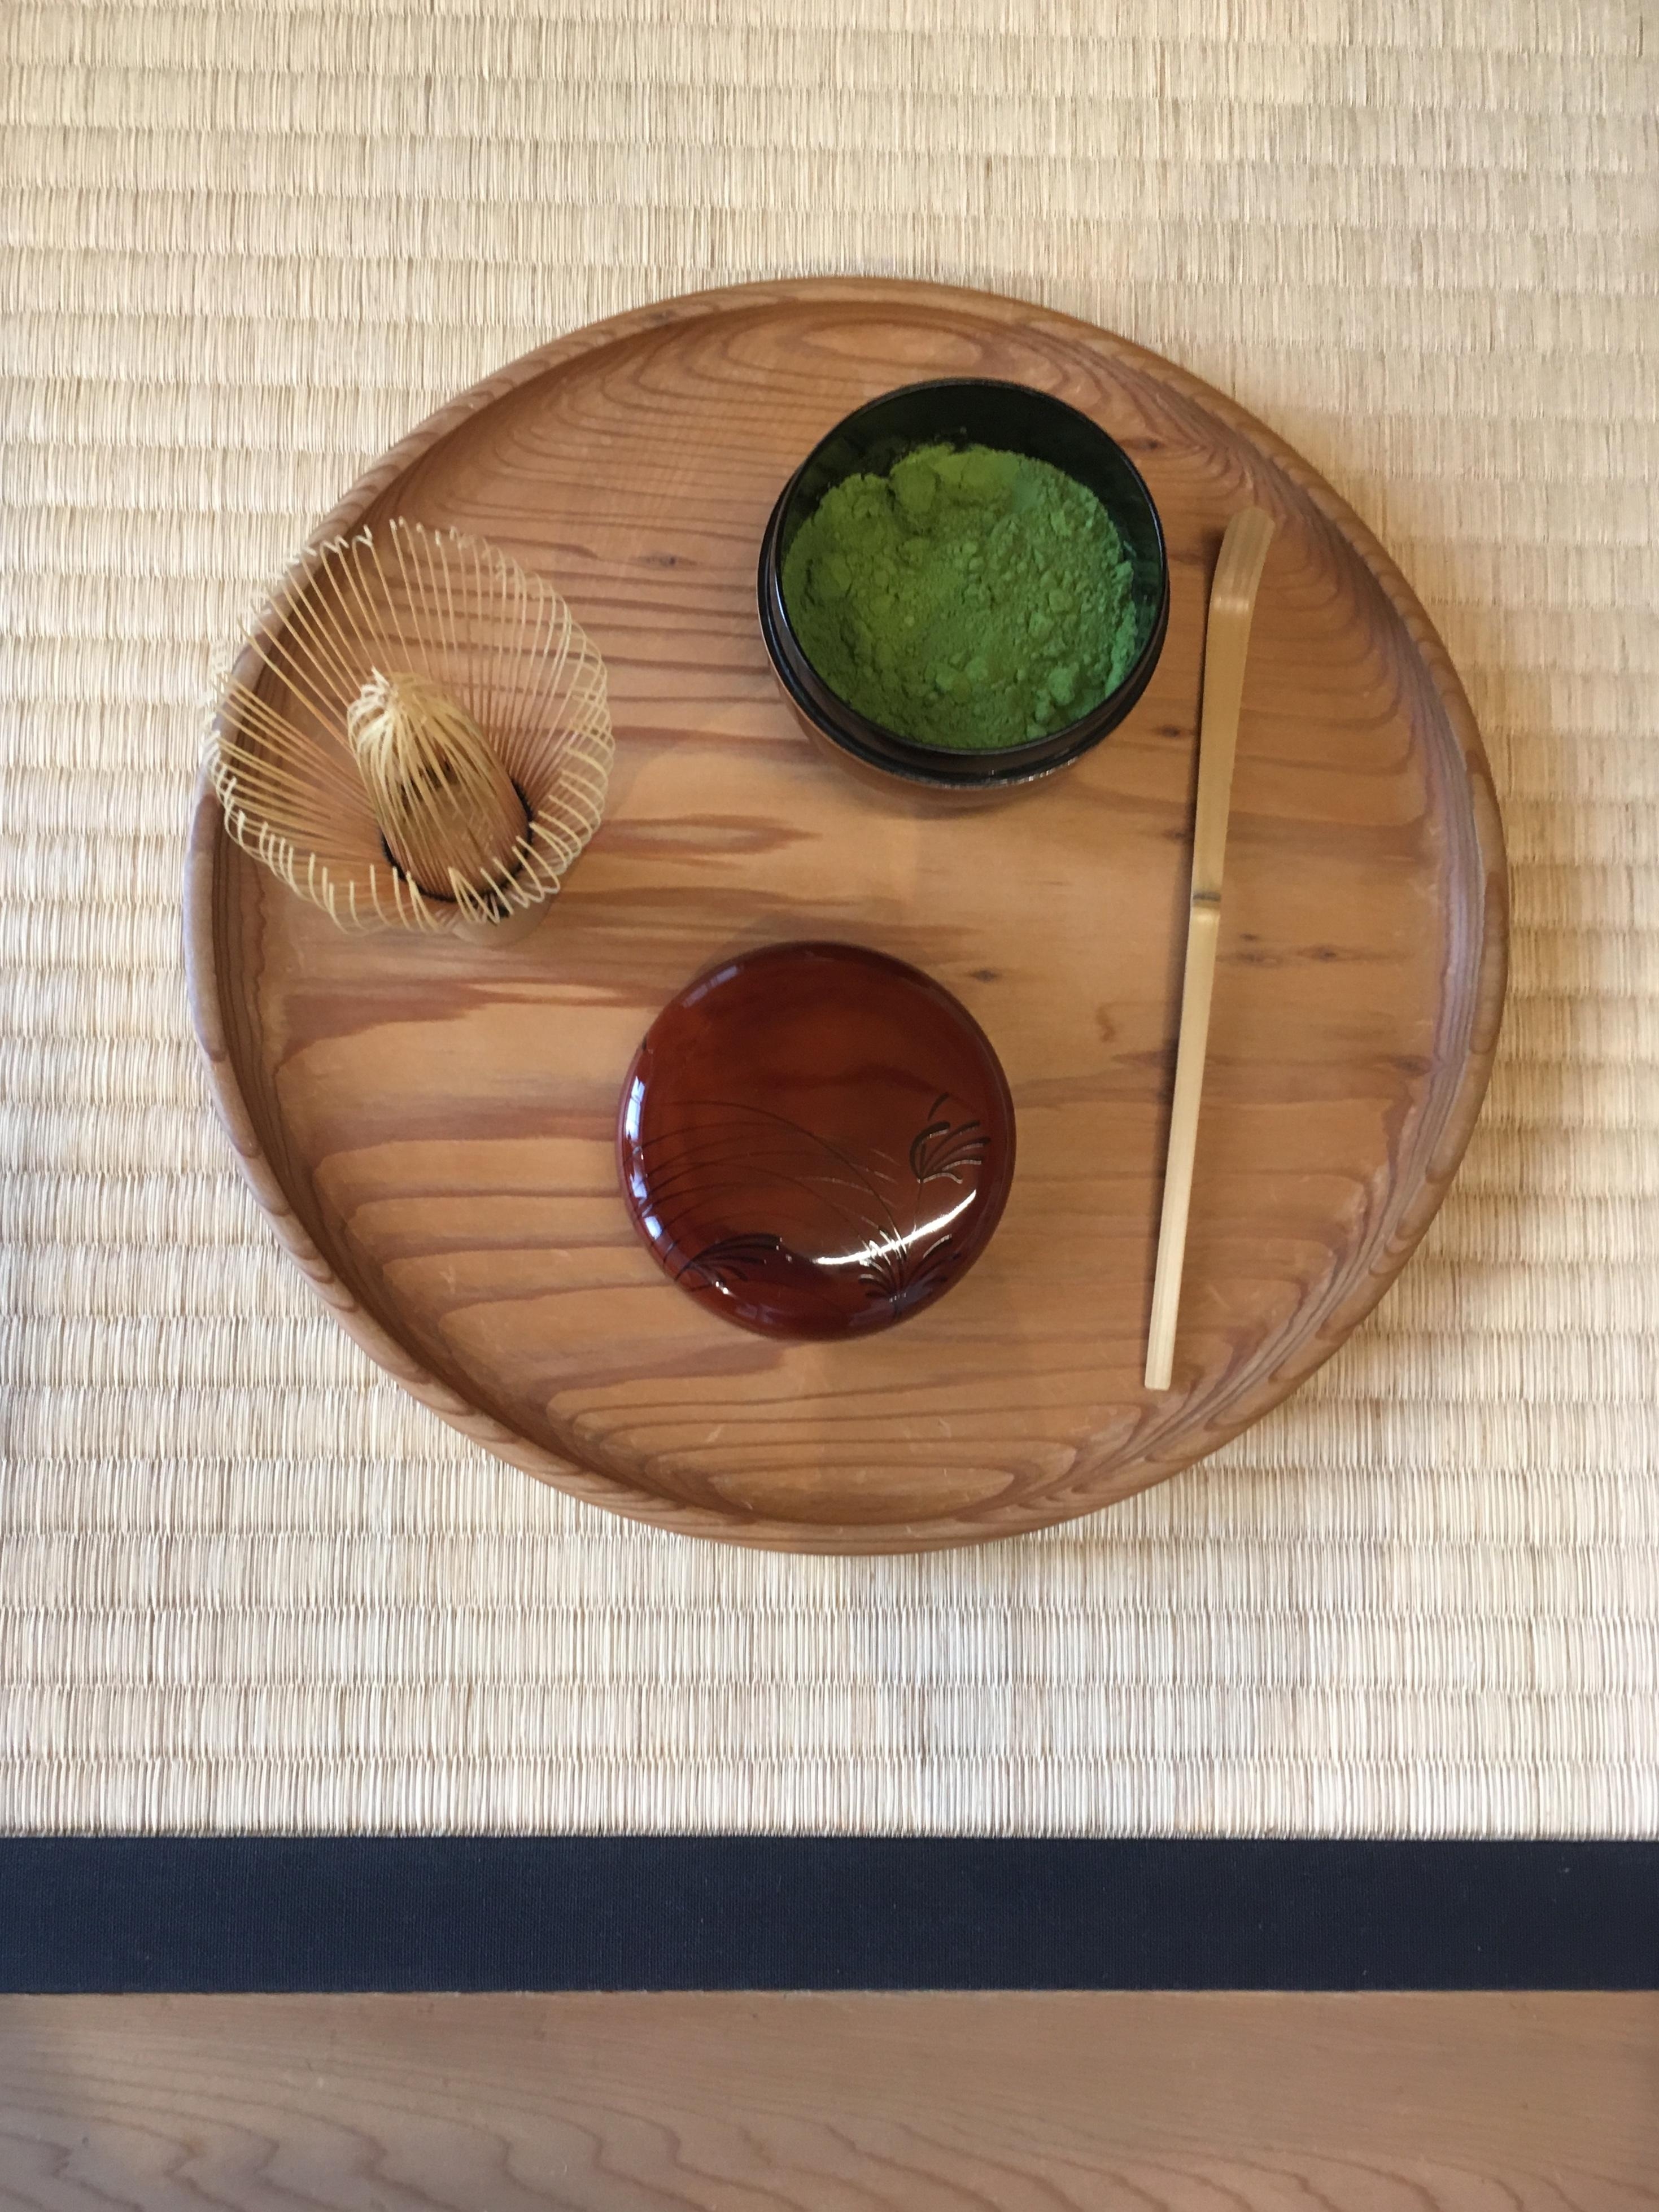 Japanische Teezeremonie 🍵 #japan #fernweh #matcha #teetime #bambus #minimalismus